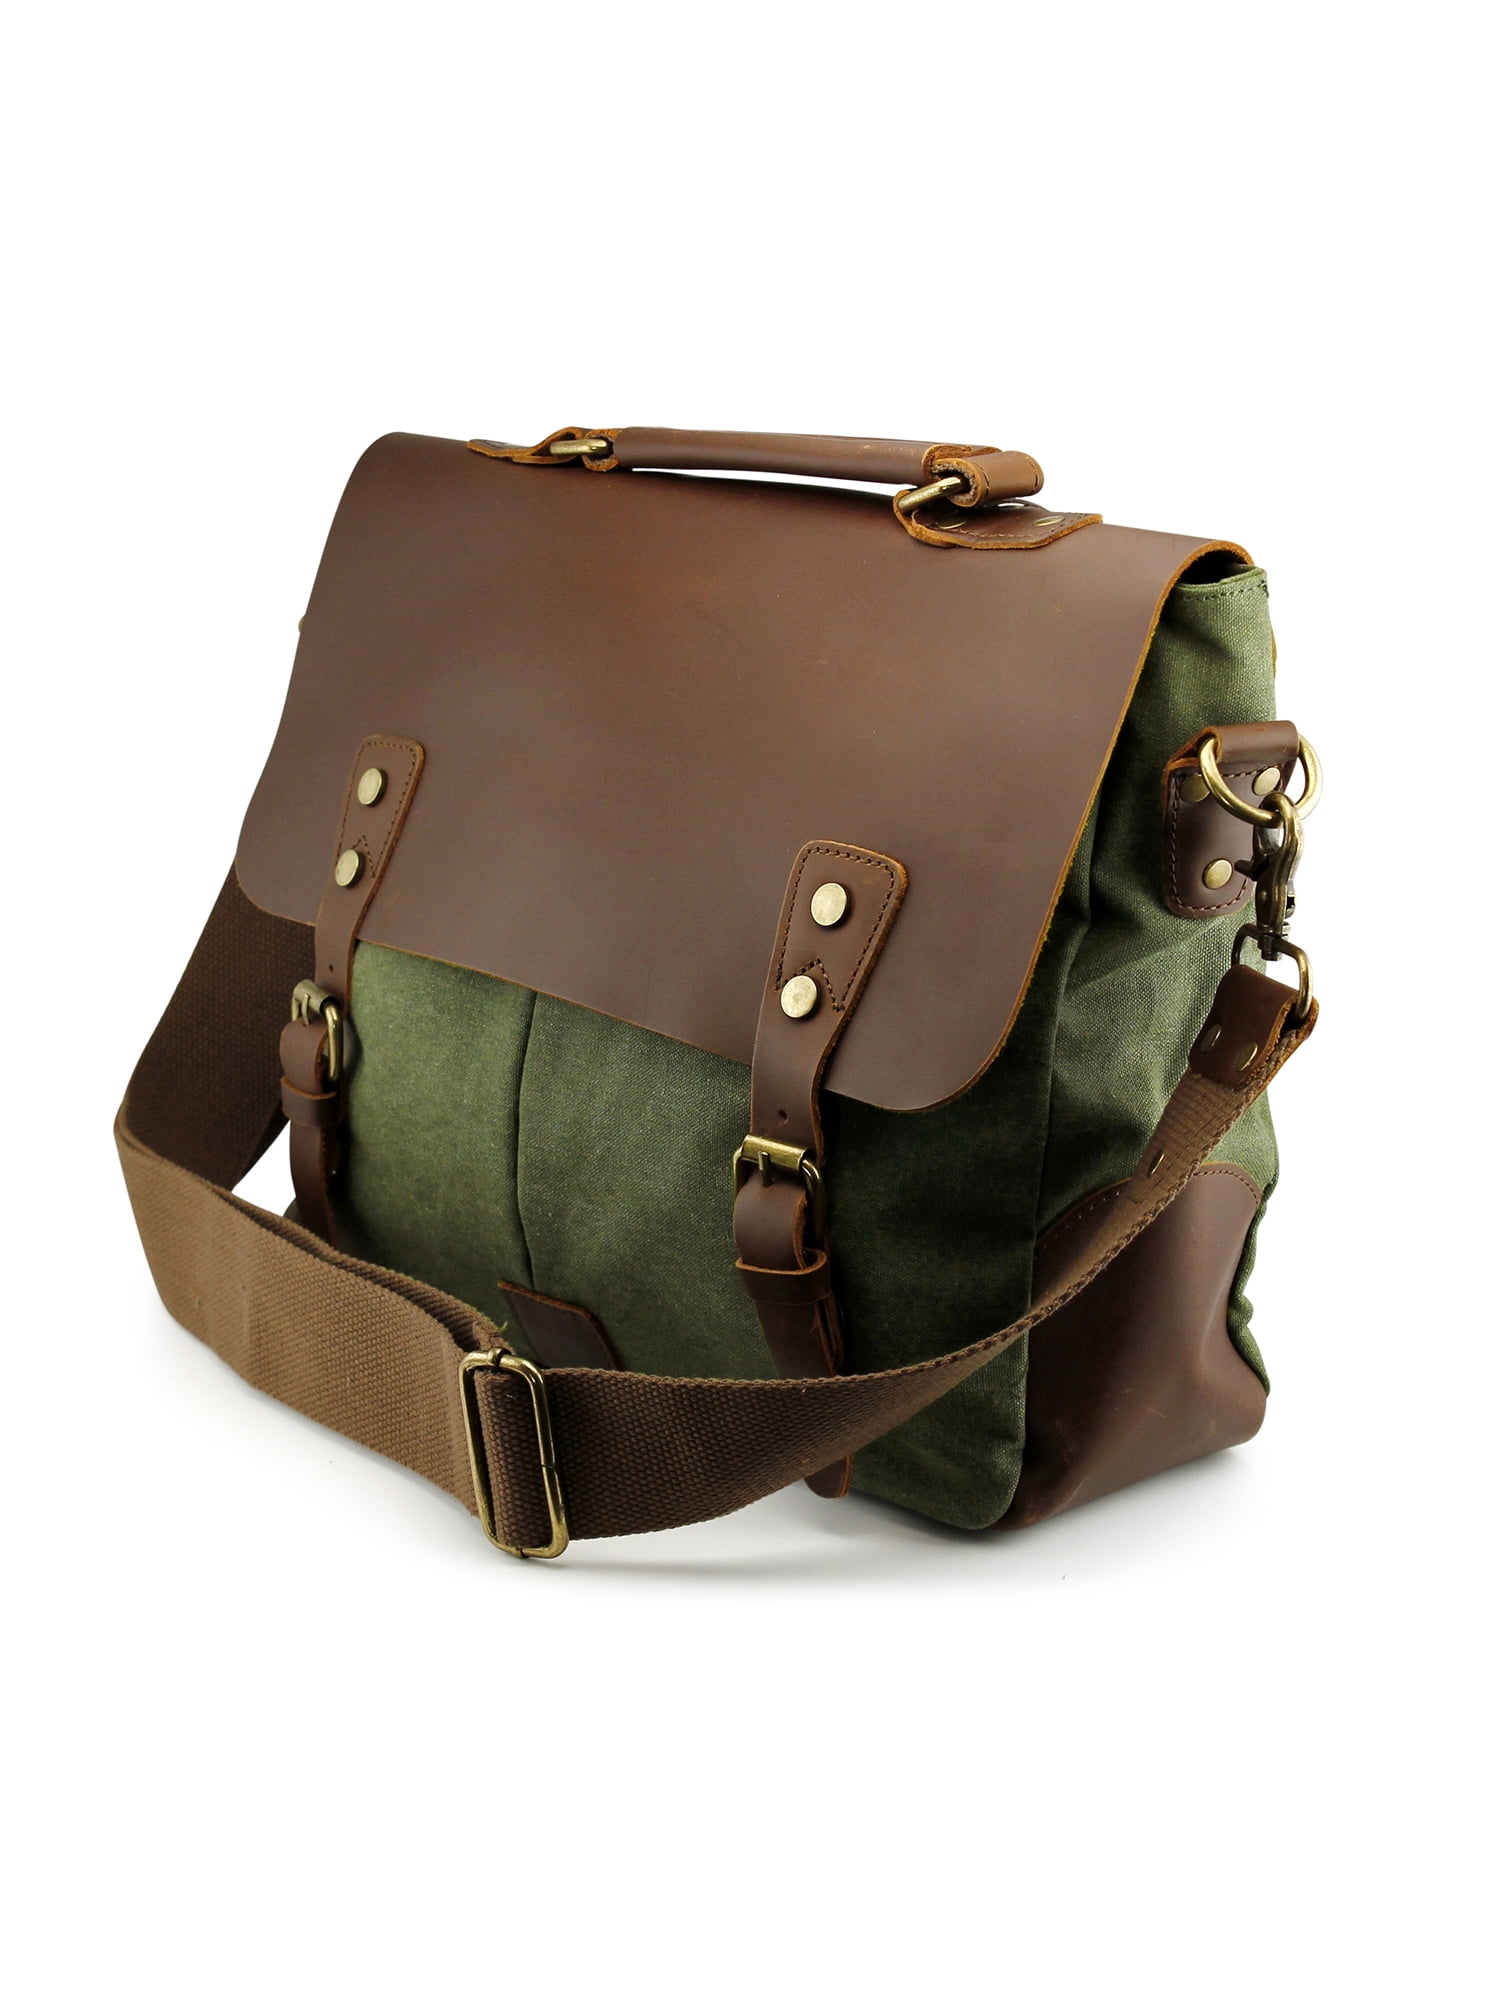 Men's Vintage Canvas Leather Satchel School Military Messenger Shoulder Bag  Travel Bag - Khaki 